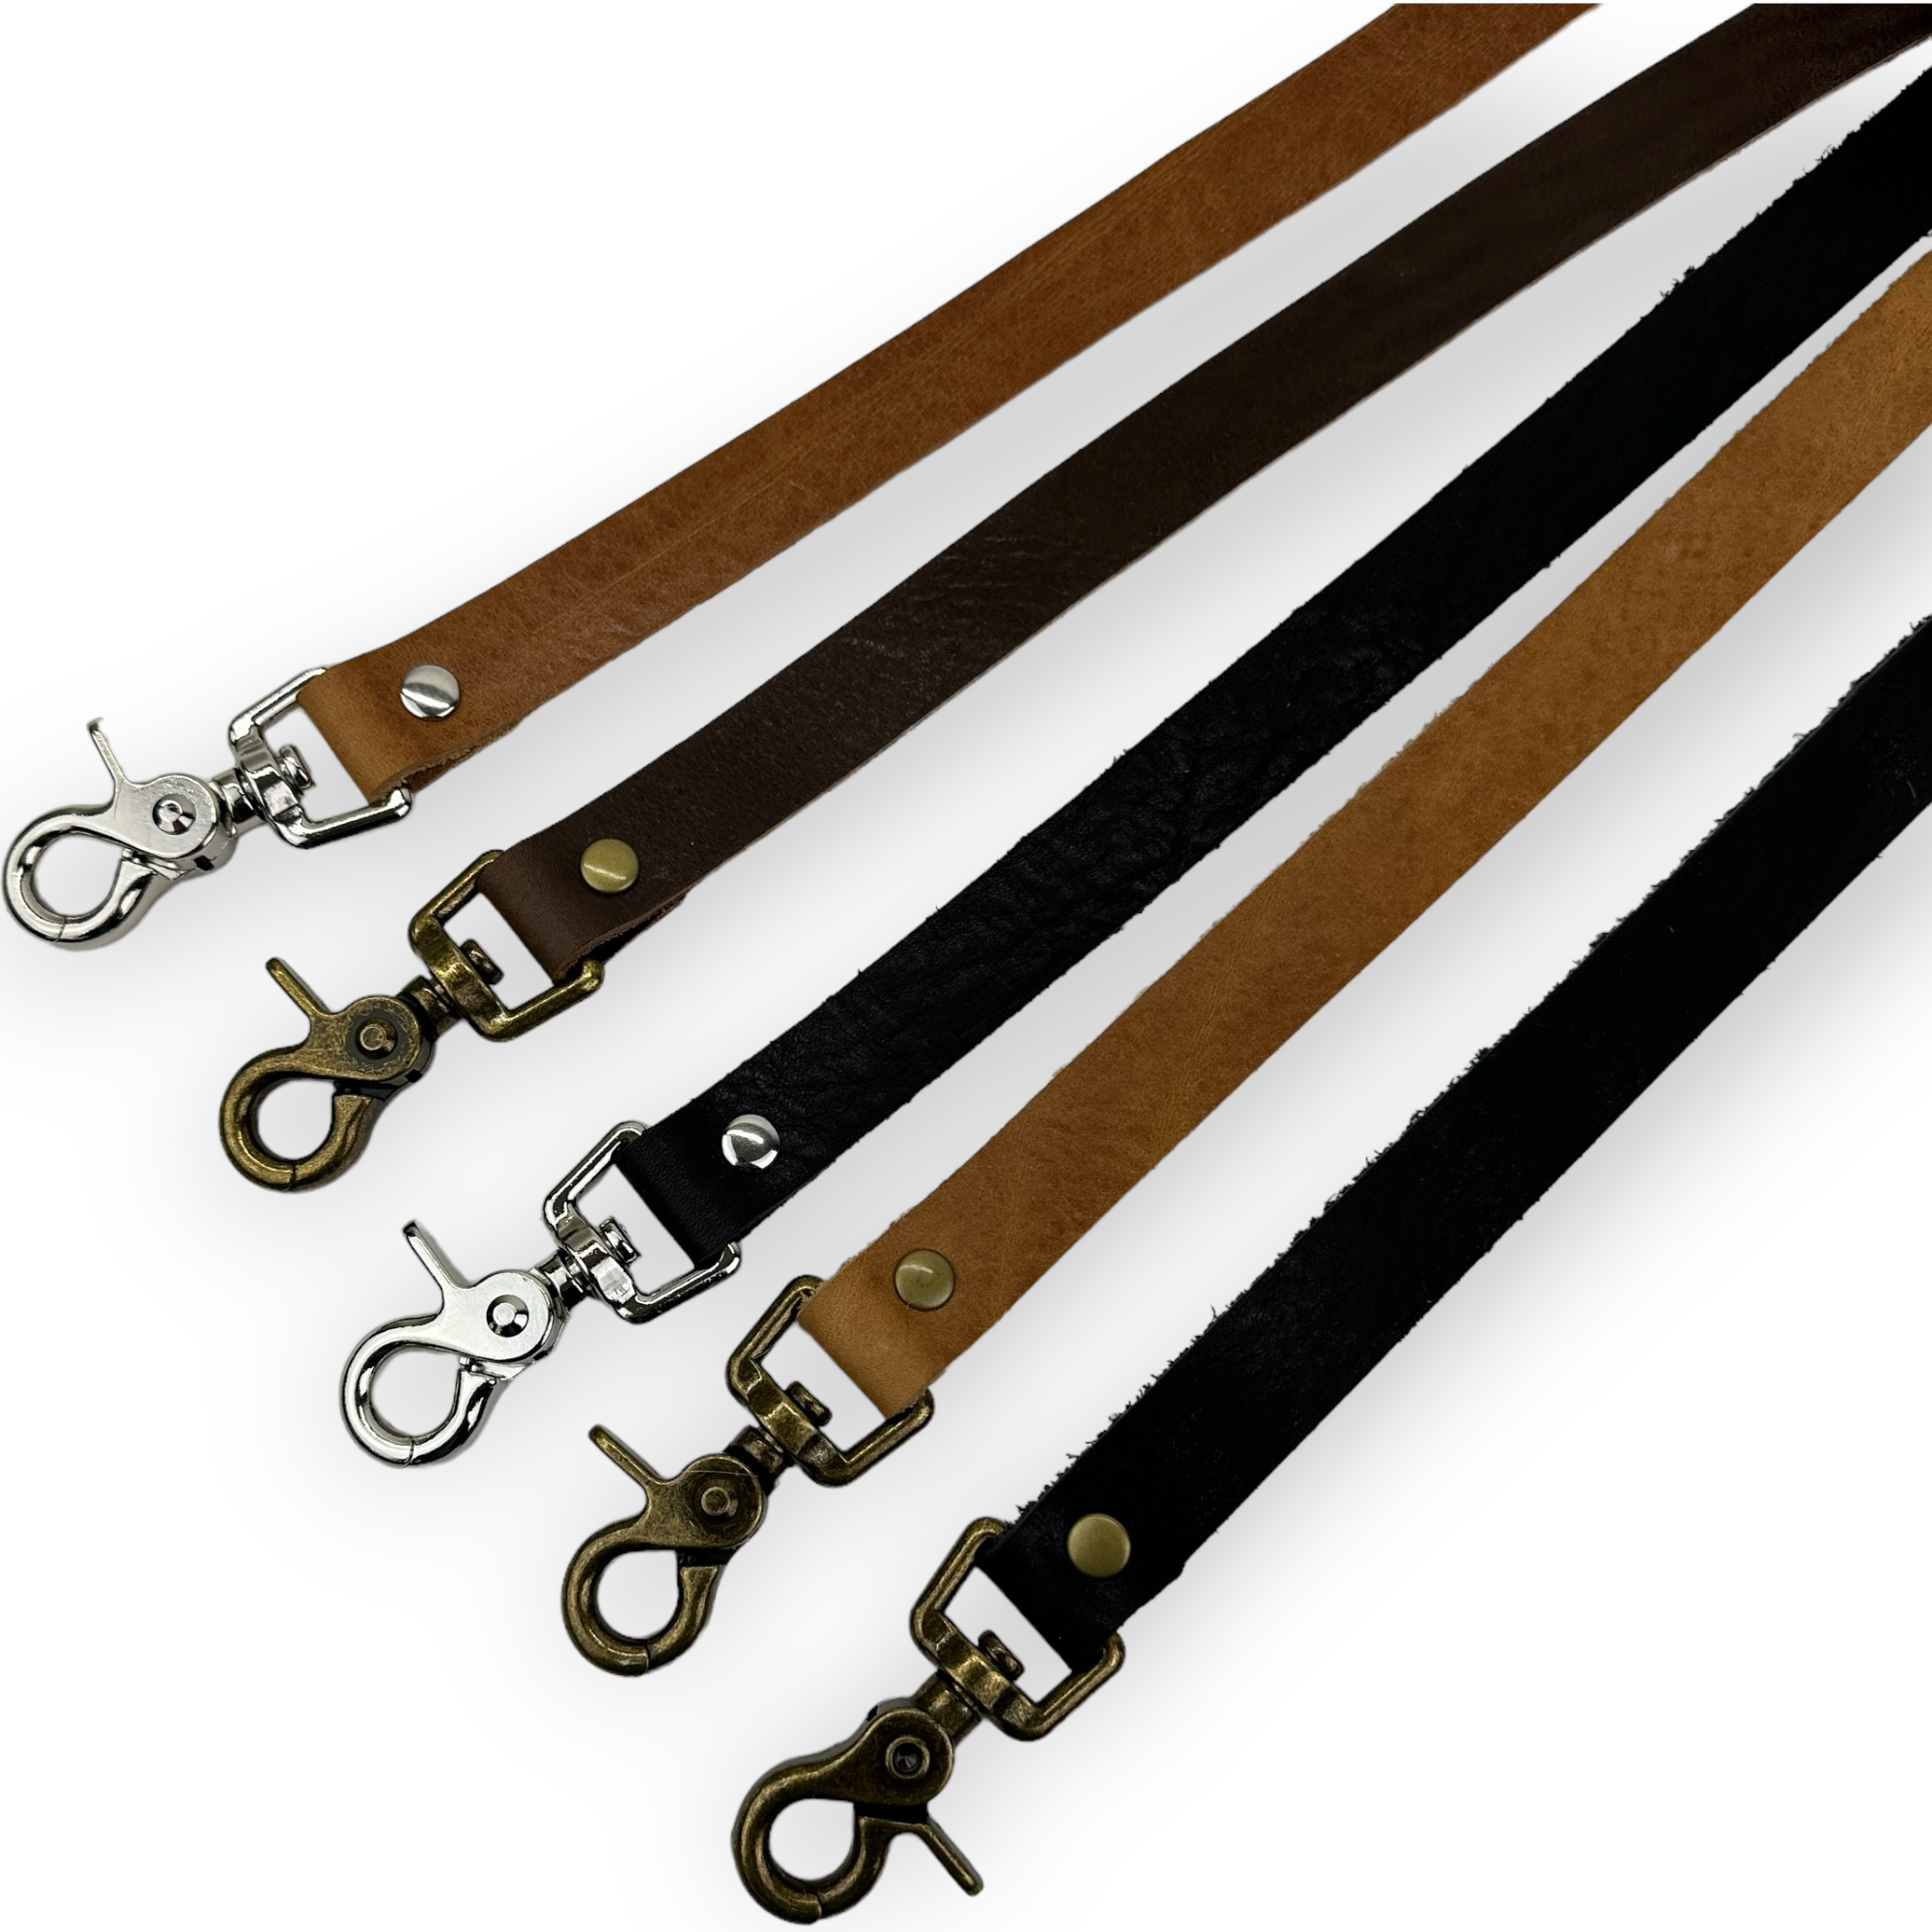 Genuine leather strap | Leather purses, Leather, Purse strap